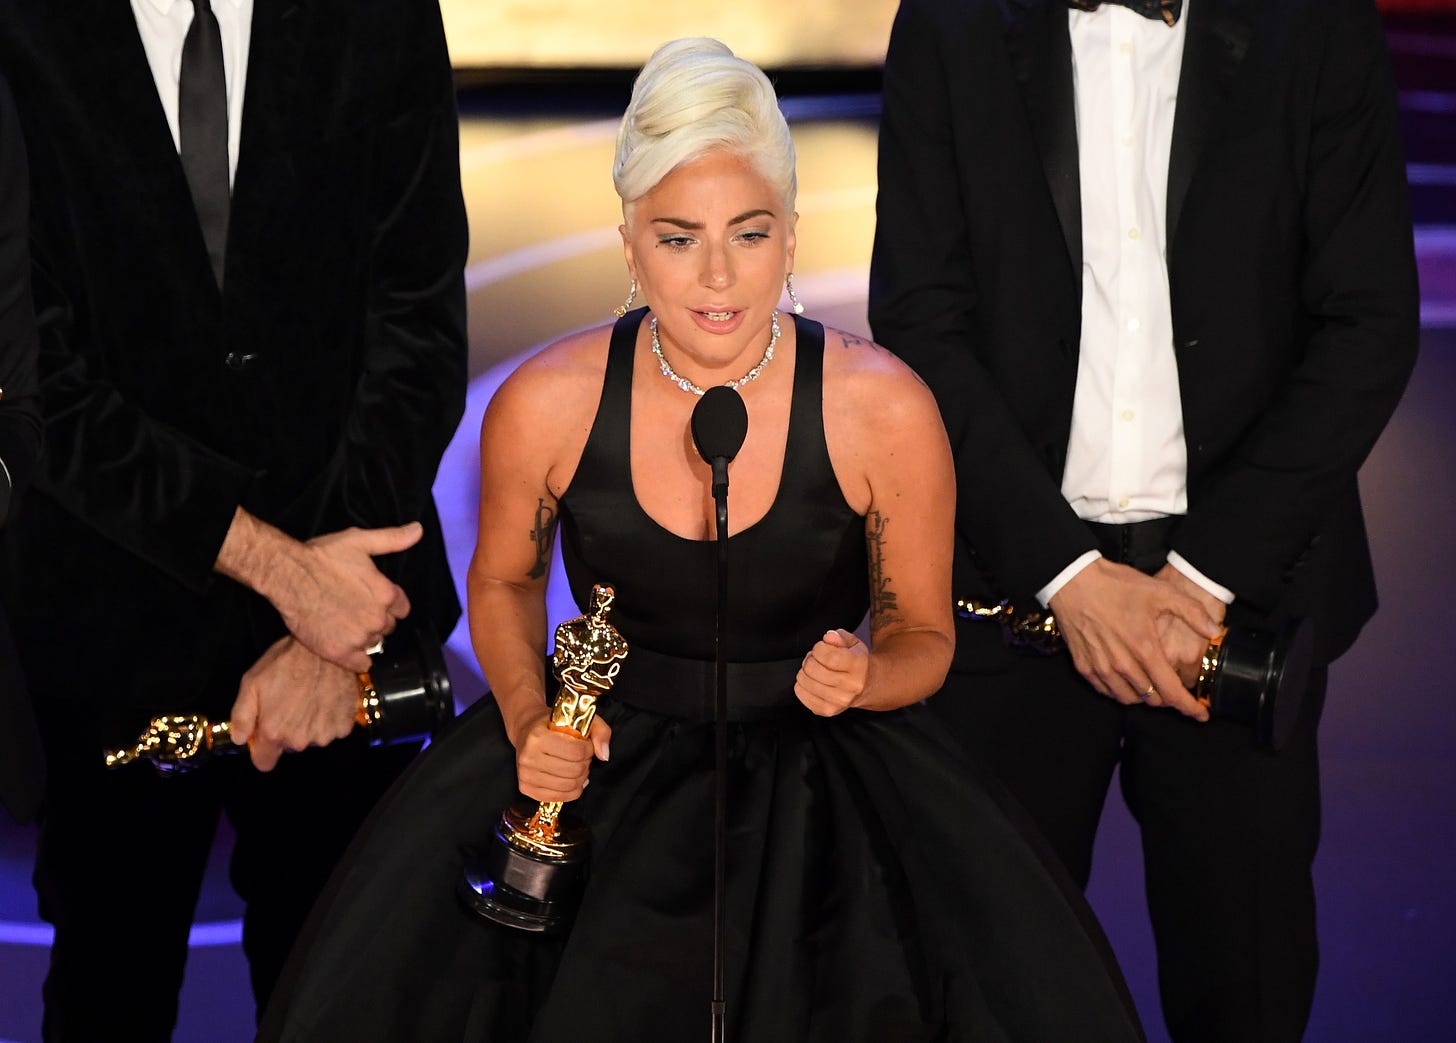 Here's Lady Gaga's Full Acceptance Speech Transcript From Oscars 2019